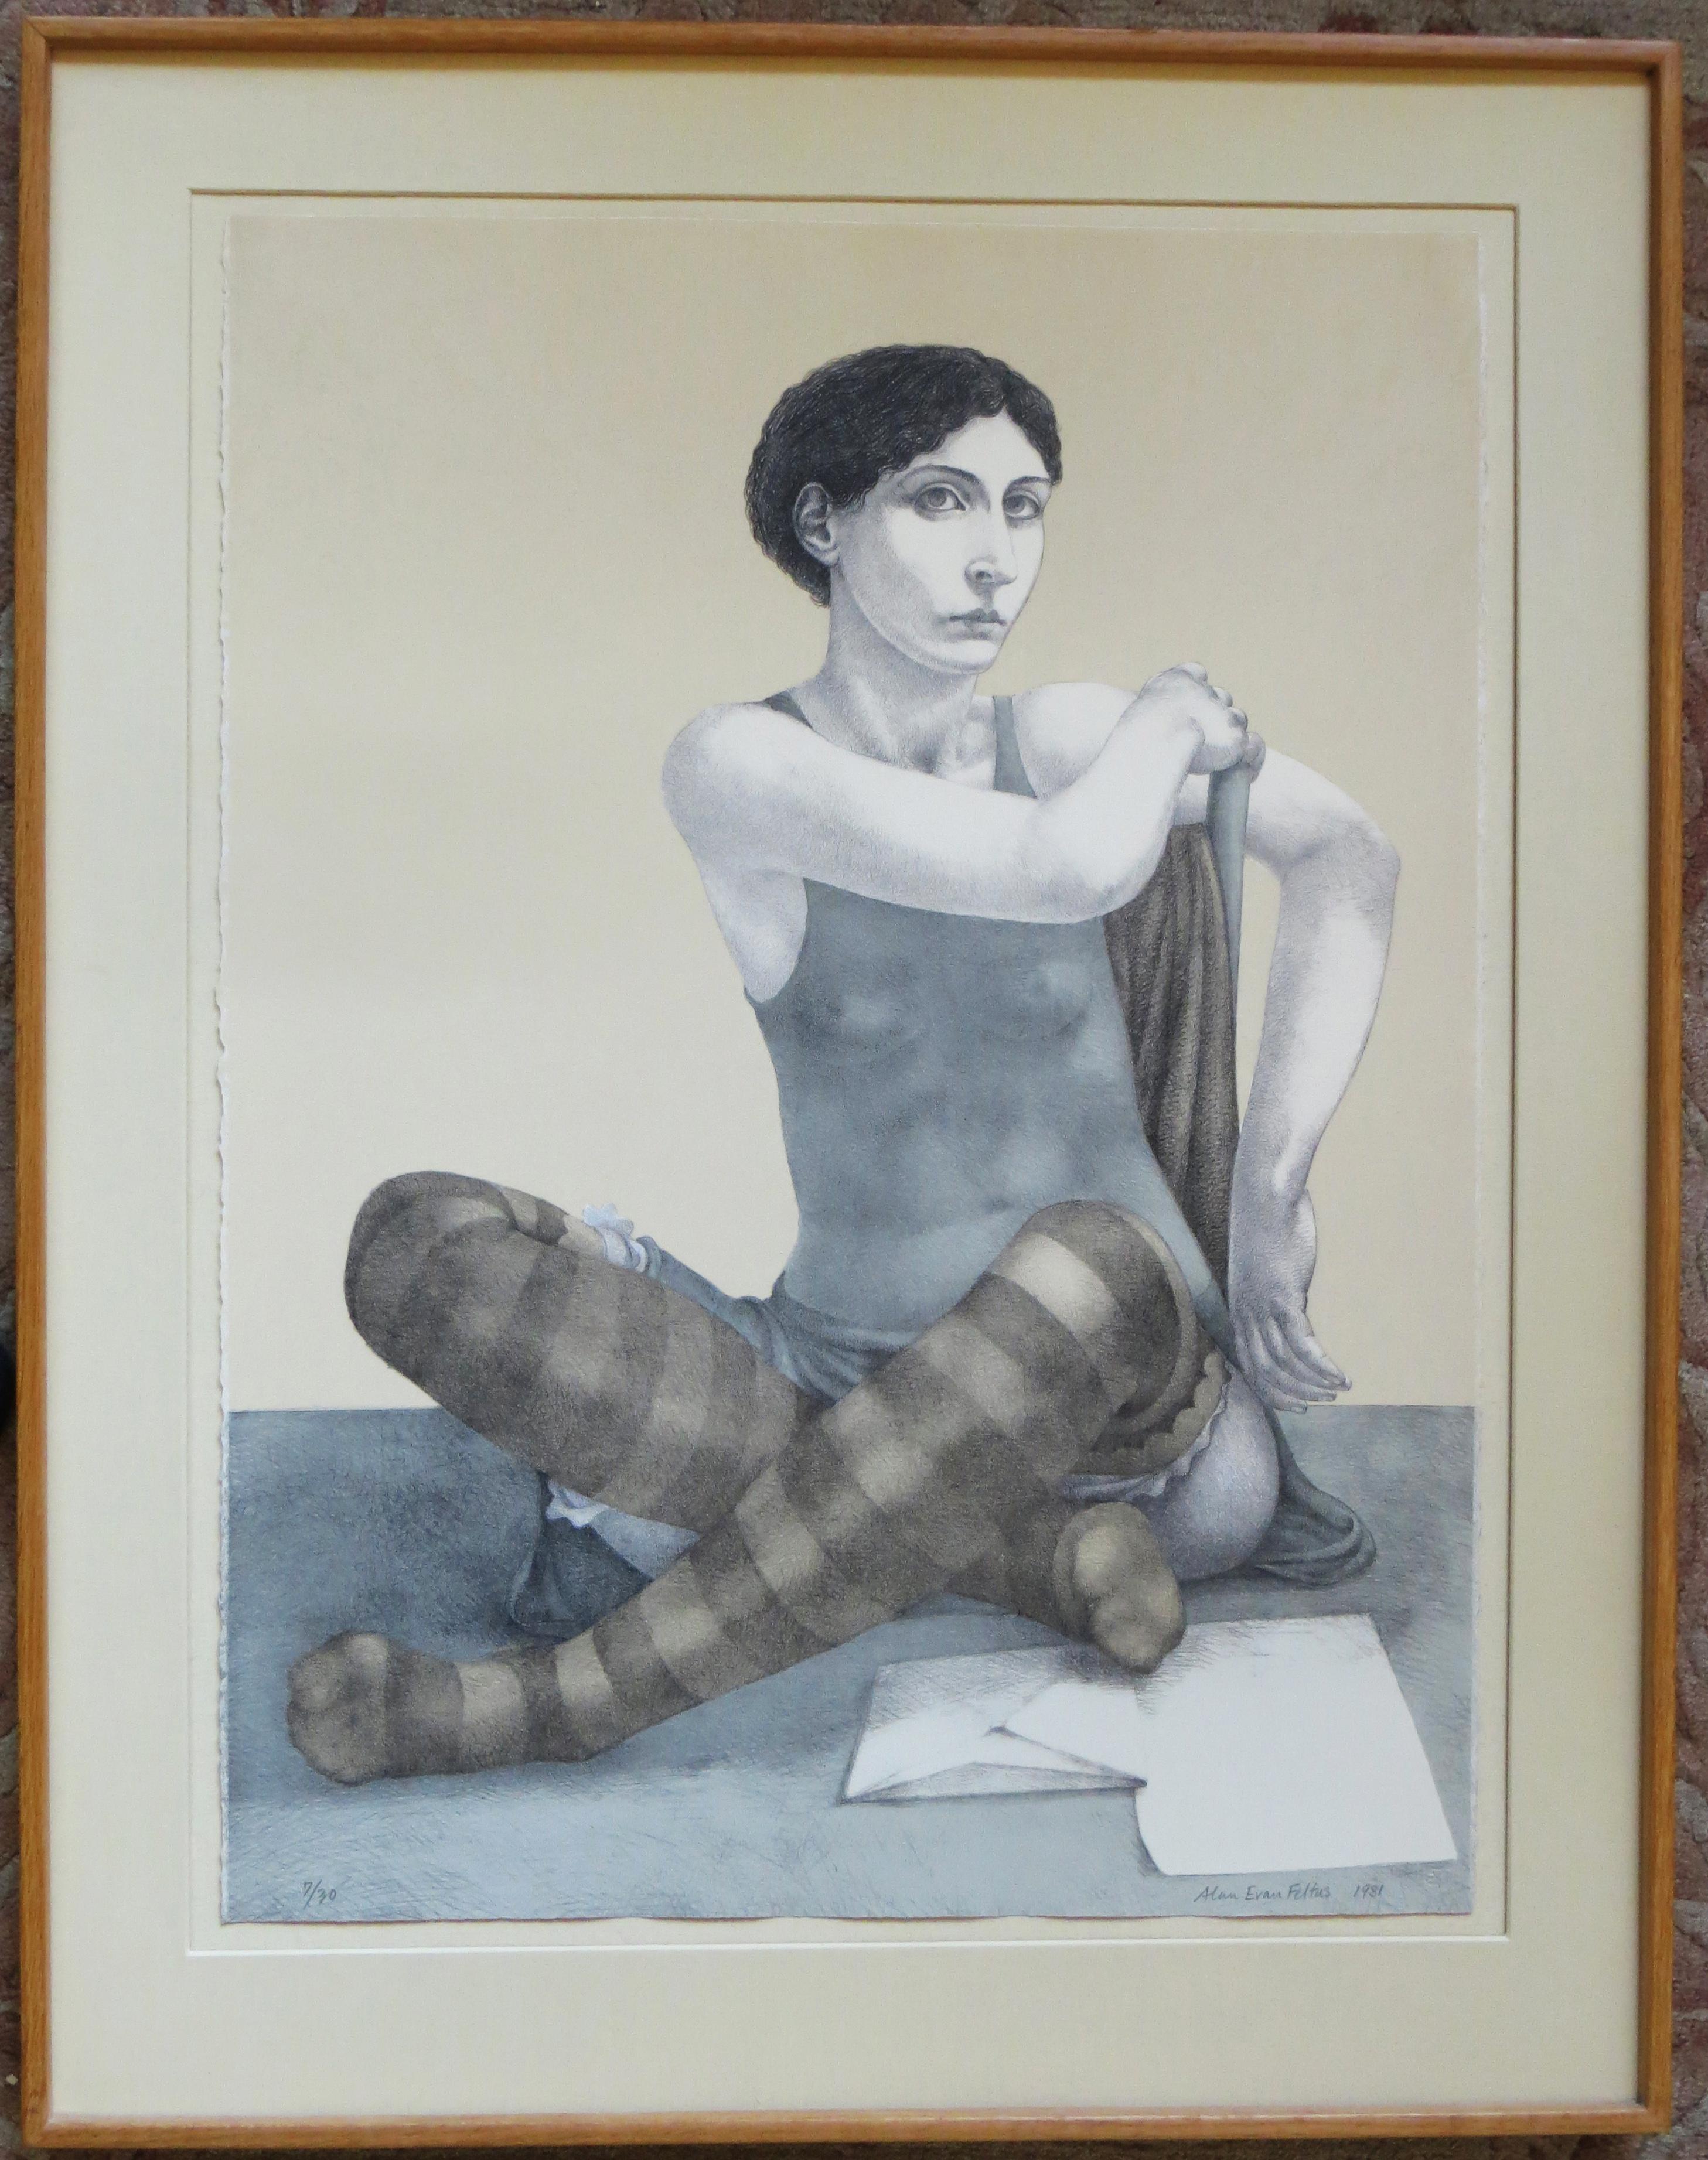 Dancer at Rest - Print by Alan Feltus